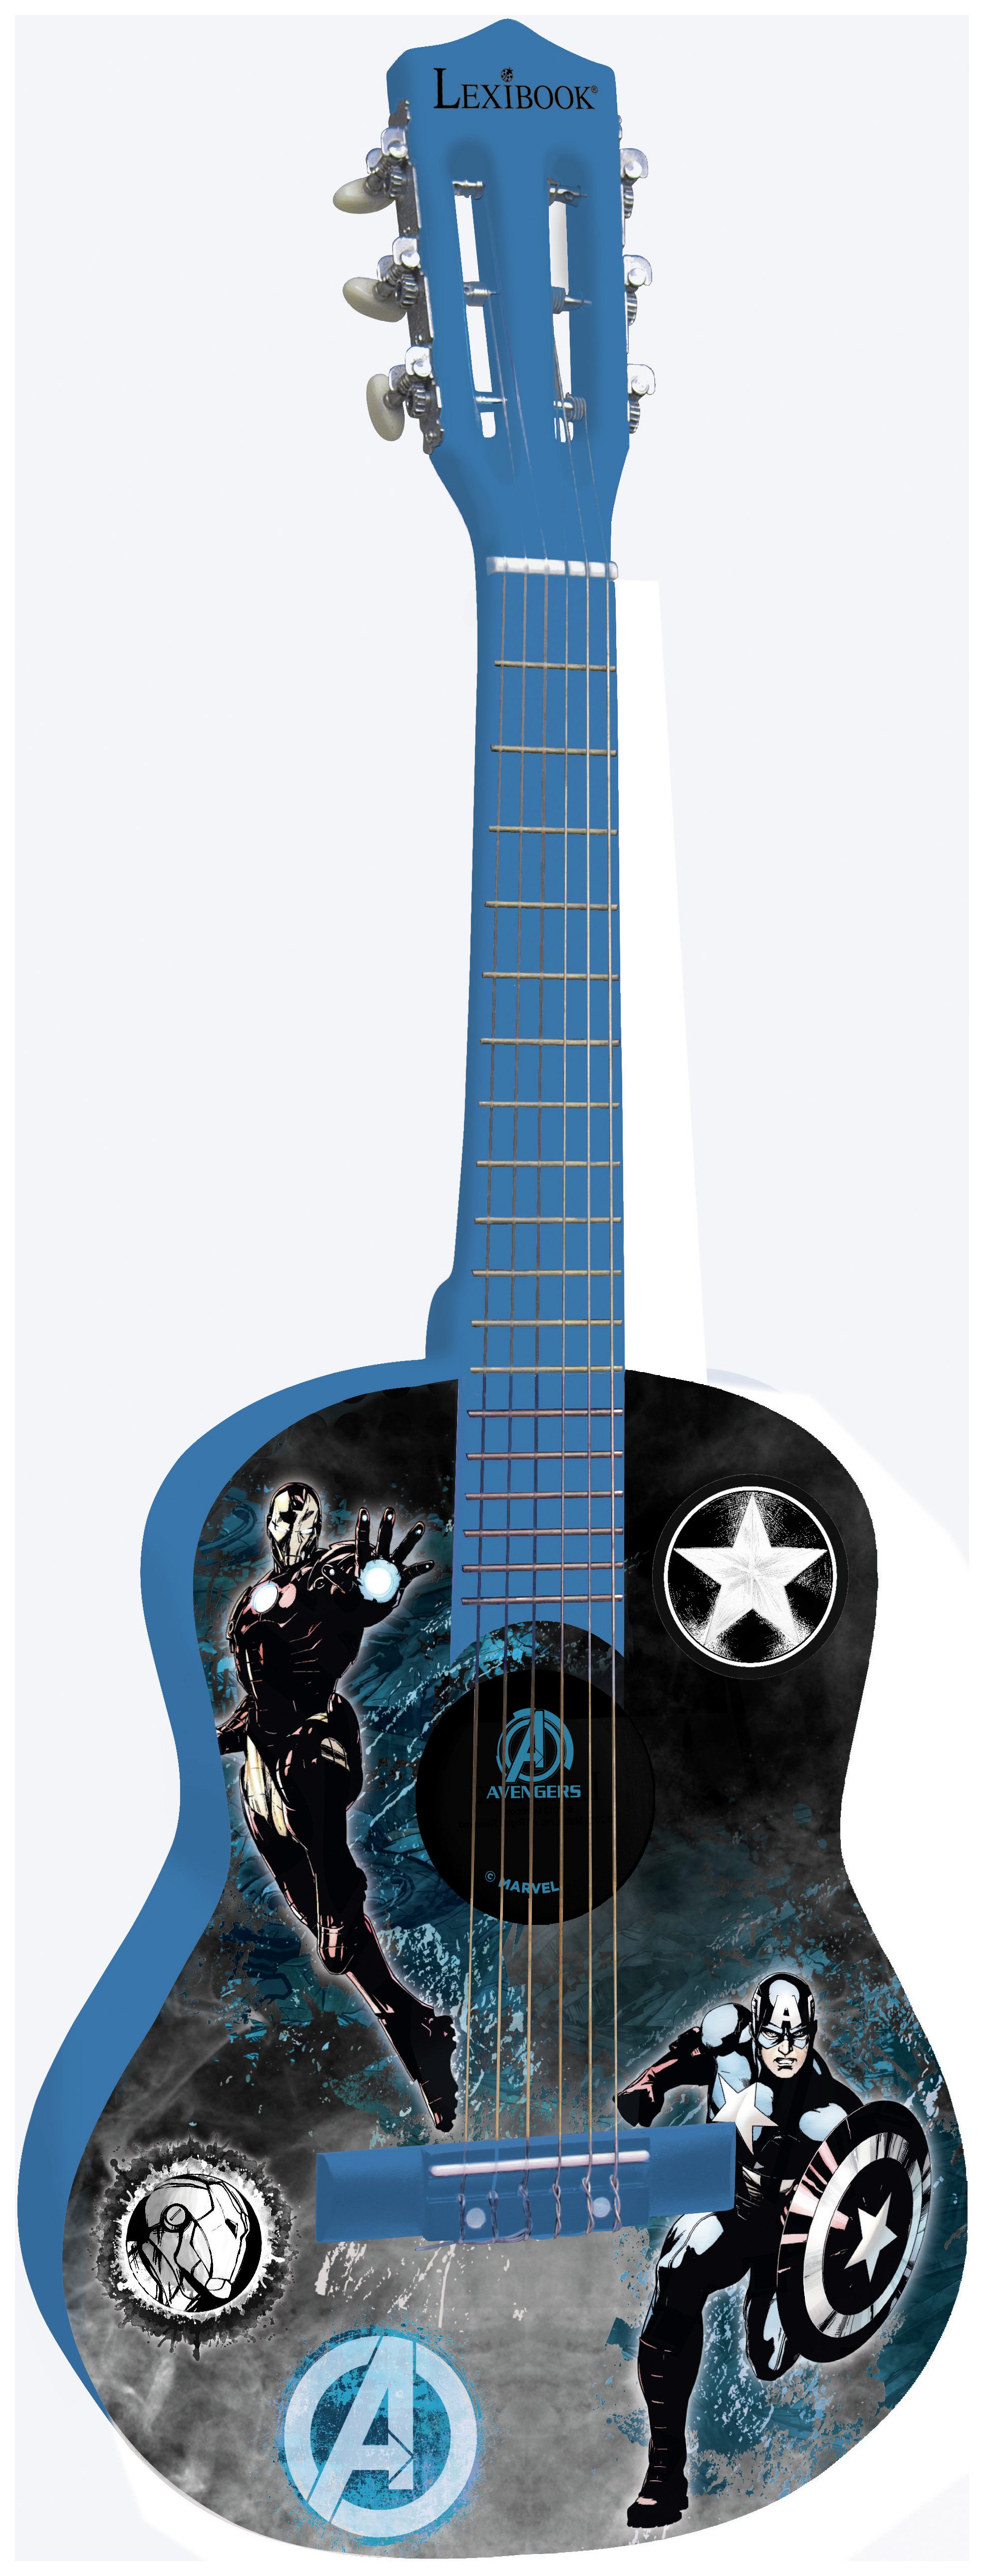 Lexibook Avengers Acoustic Guitar